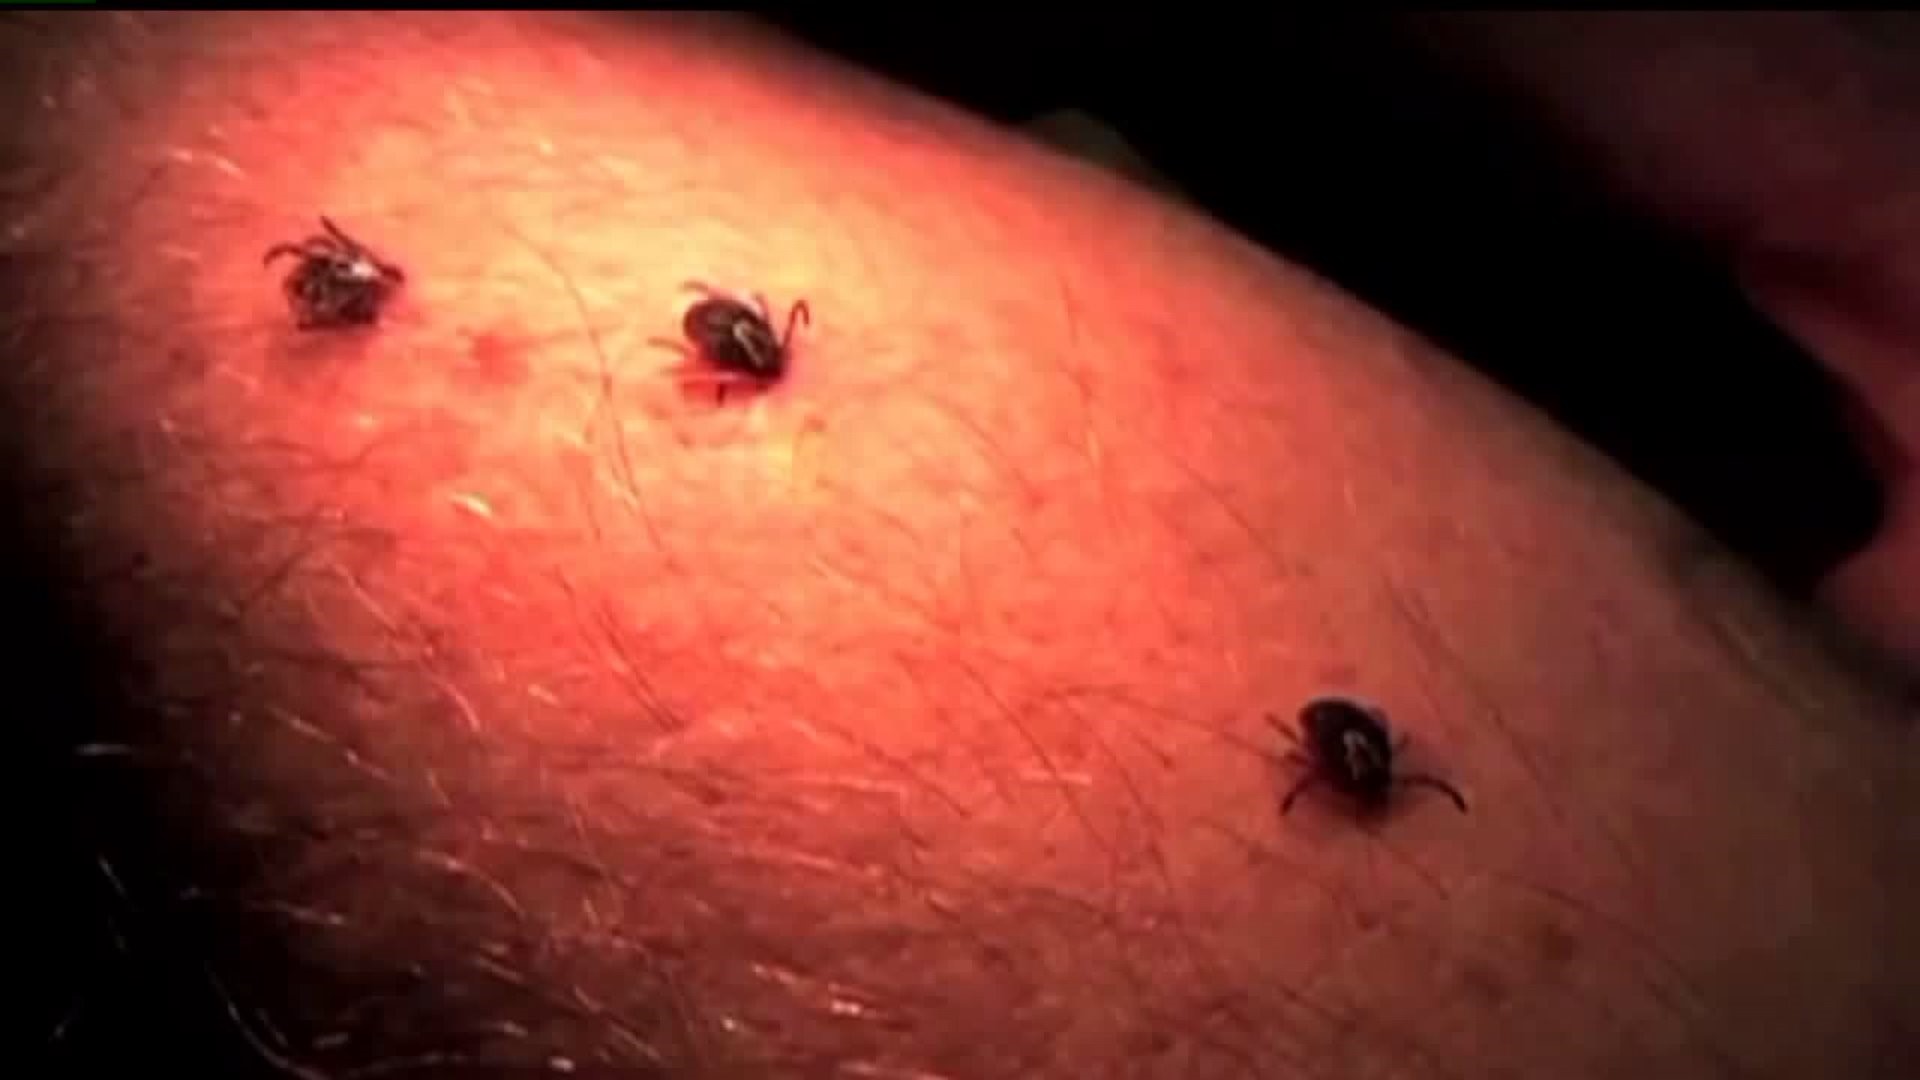 Health experts urge caution as PA enters "Lyme Season"